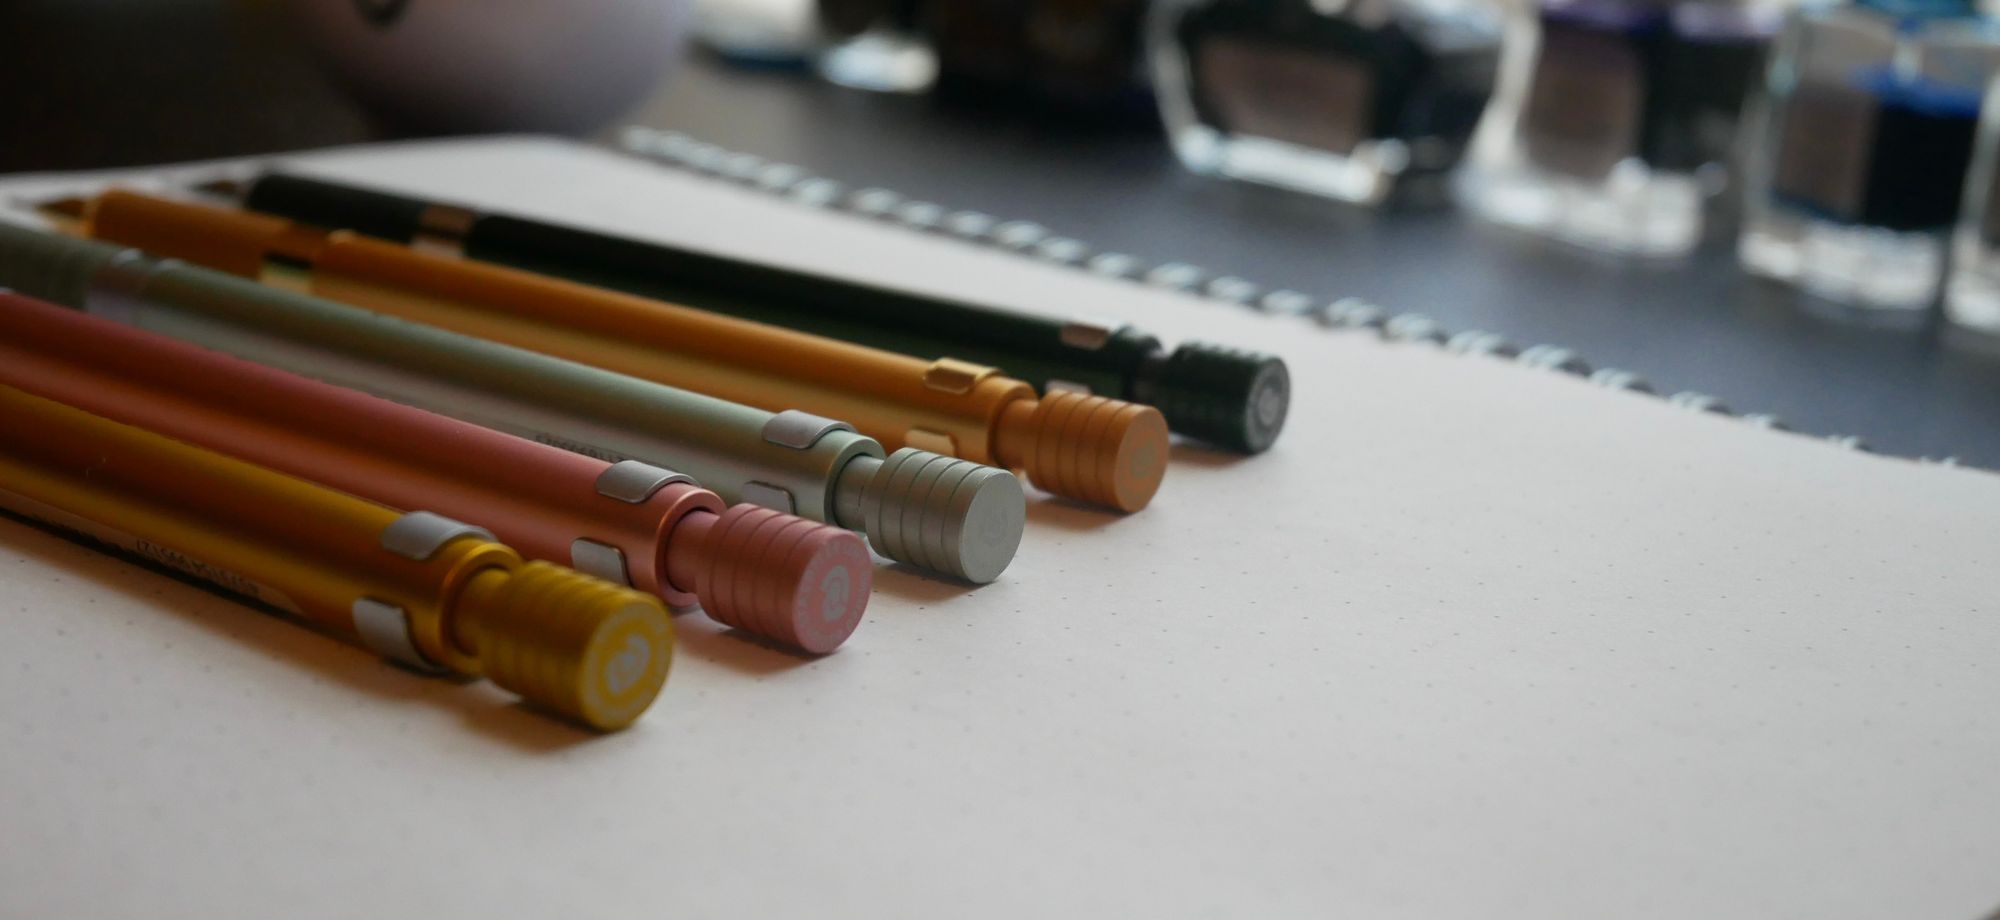 ♥️ Staedtler limited edition mechanical pencil : r/mechanicalpencils